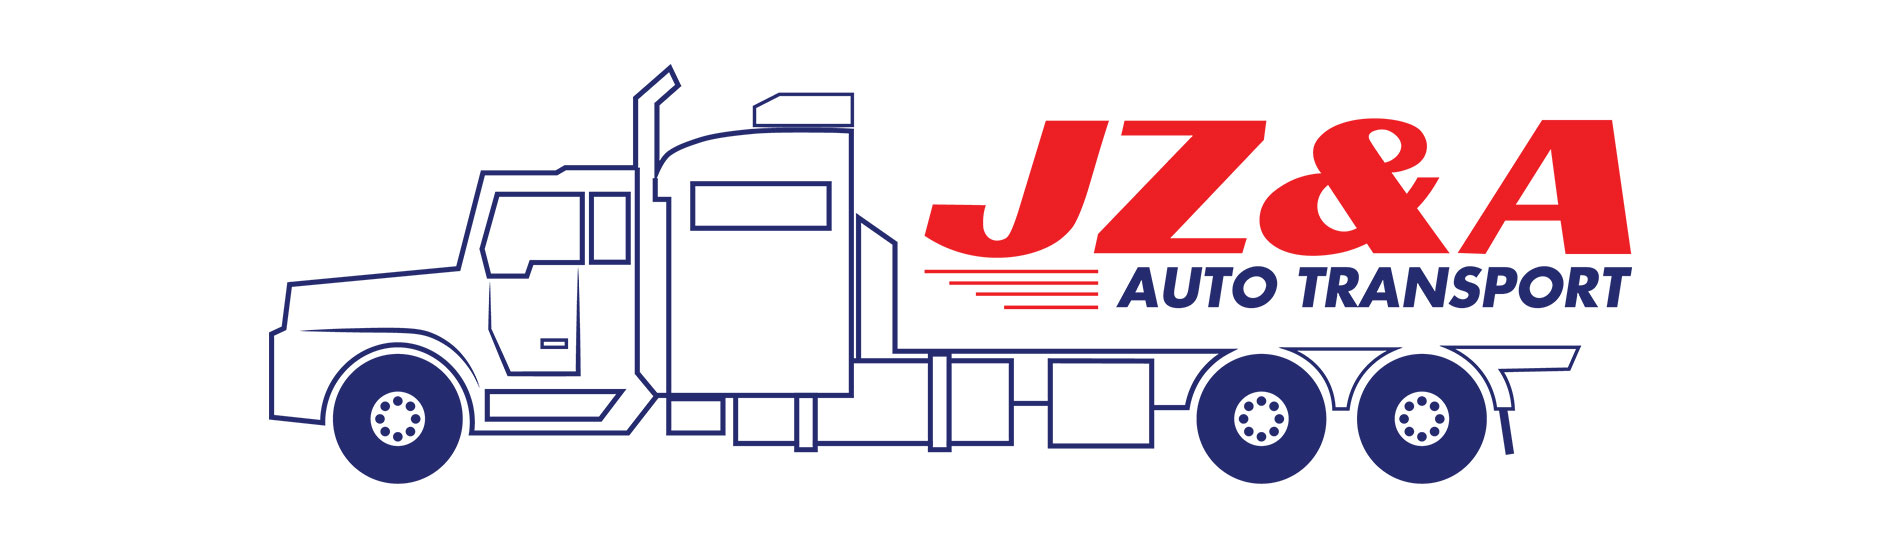 J Z & A Auto Transport in York | J Z & A Auto Sales LLC. York South Carolina